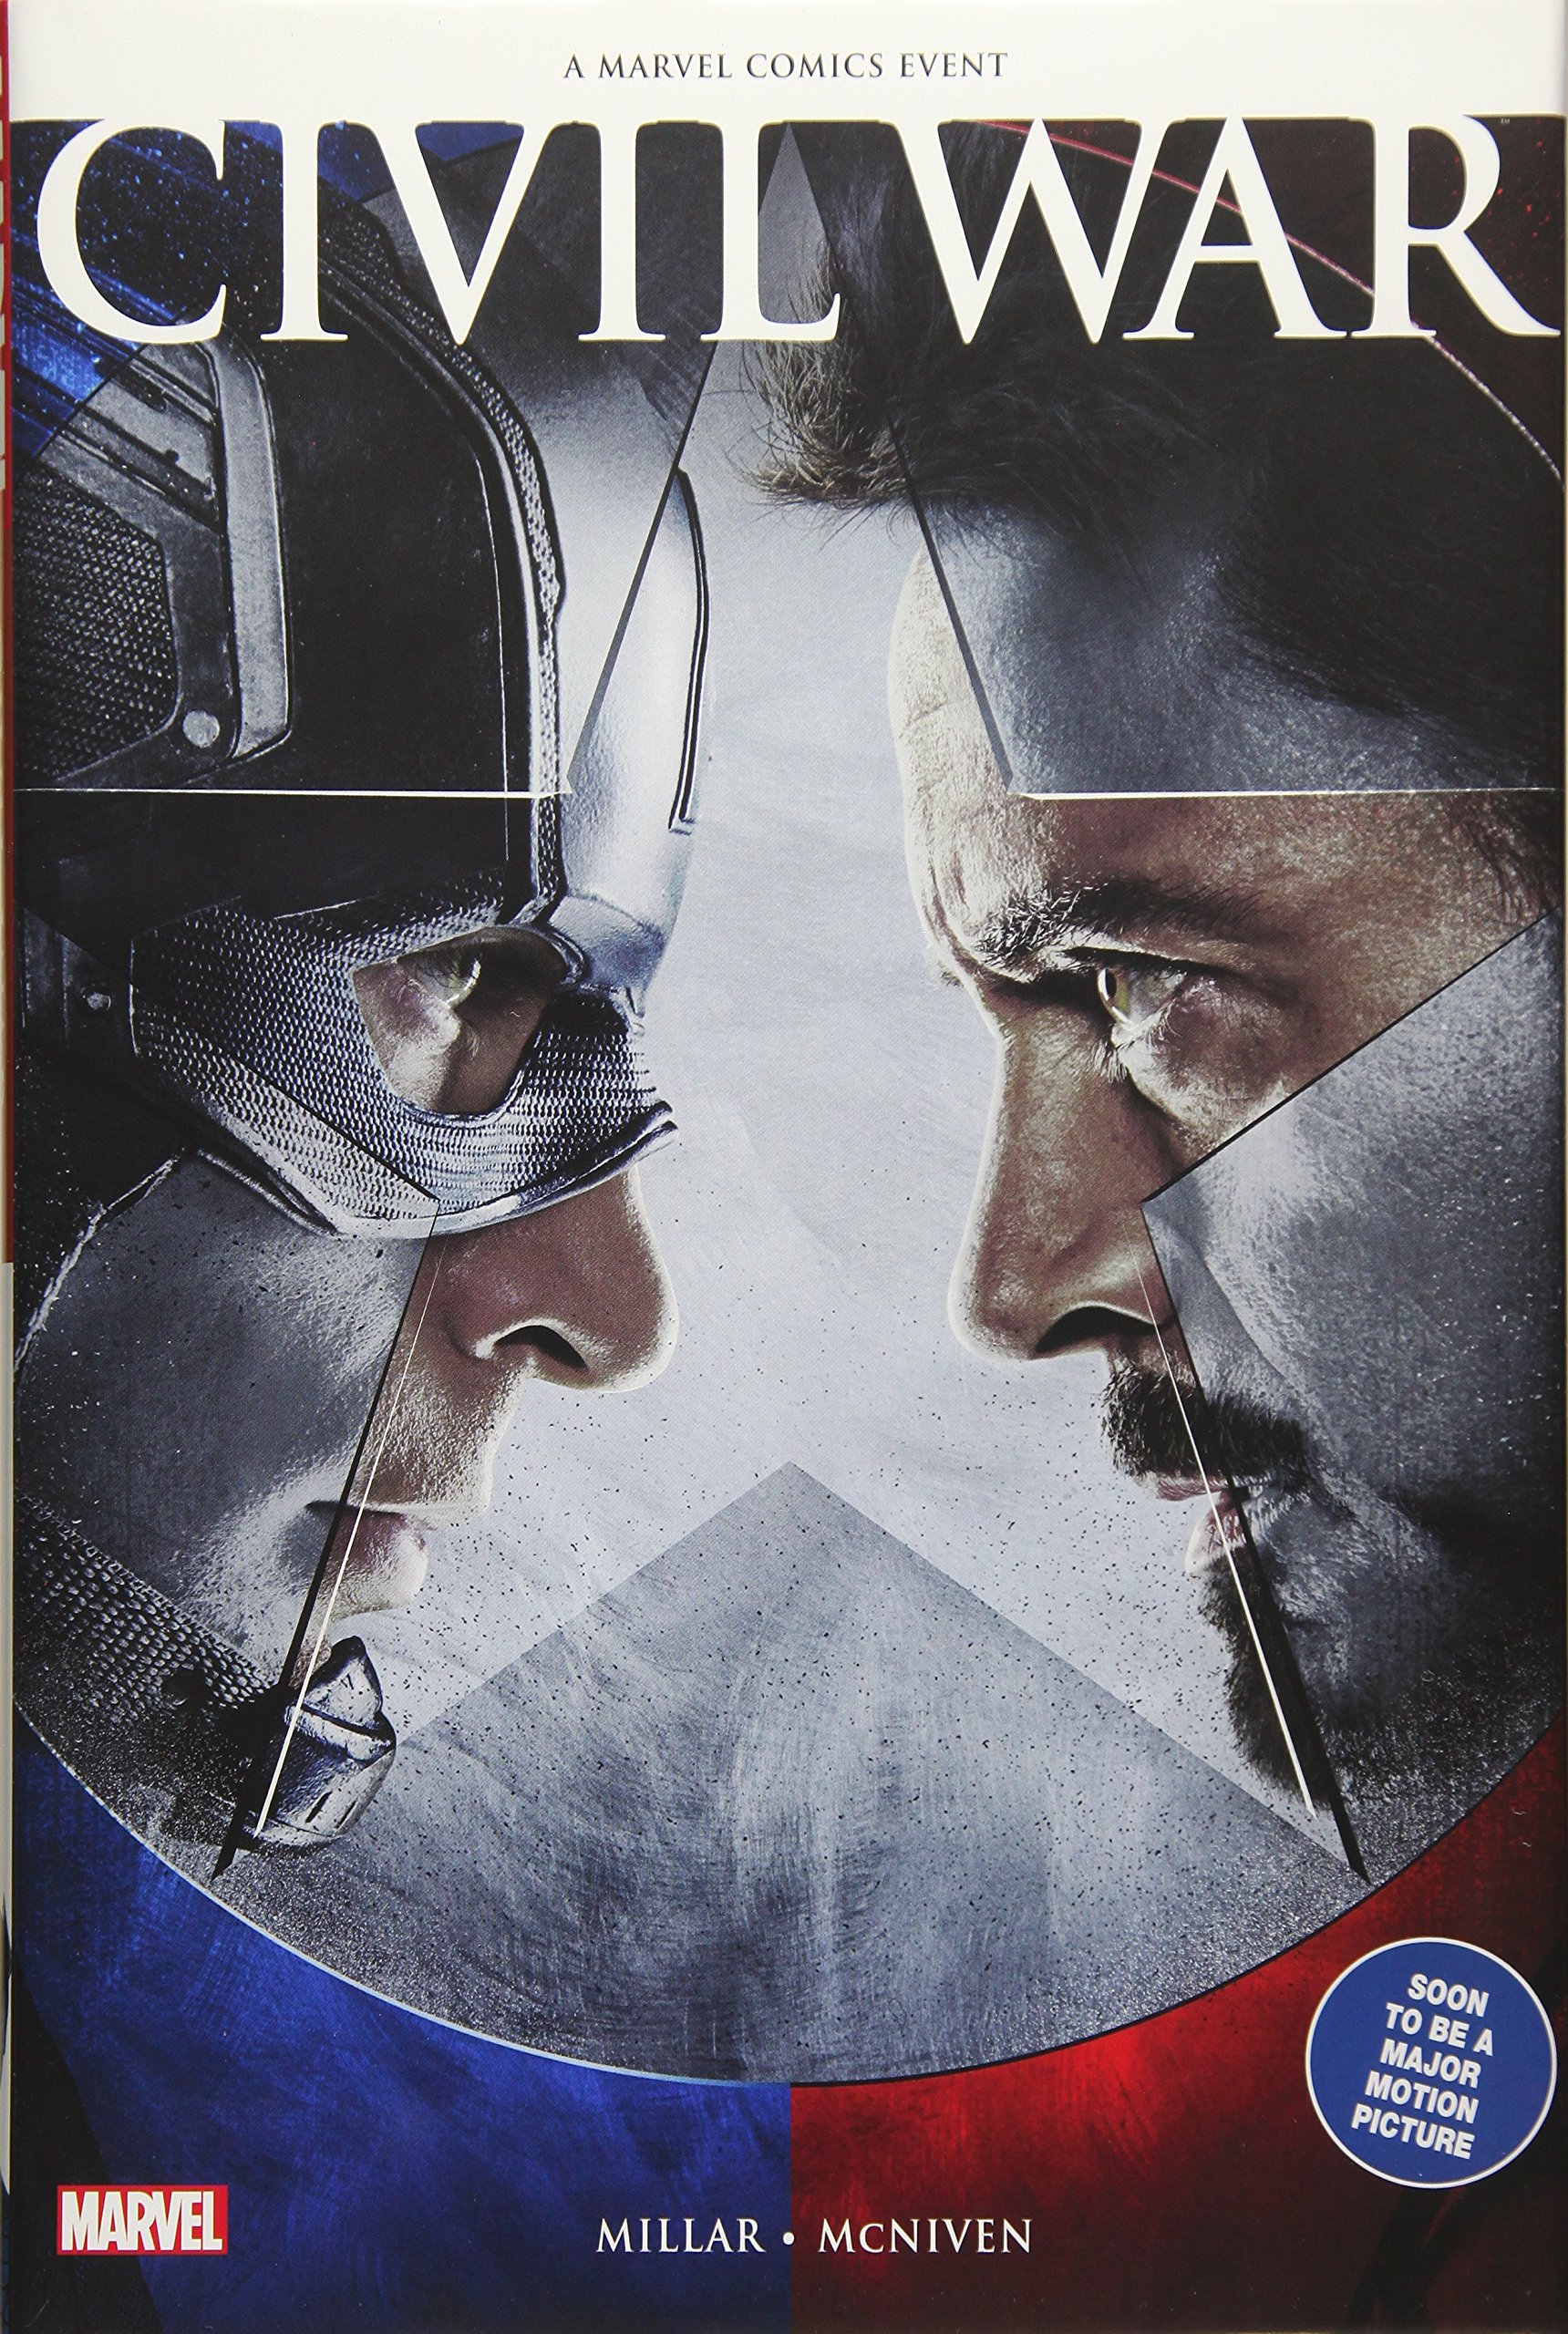 Civil War Hardcover Movie Cover